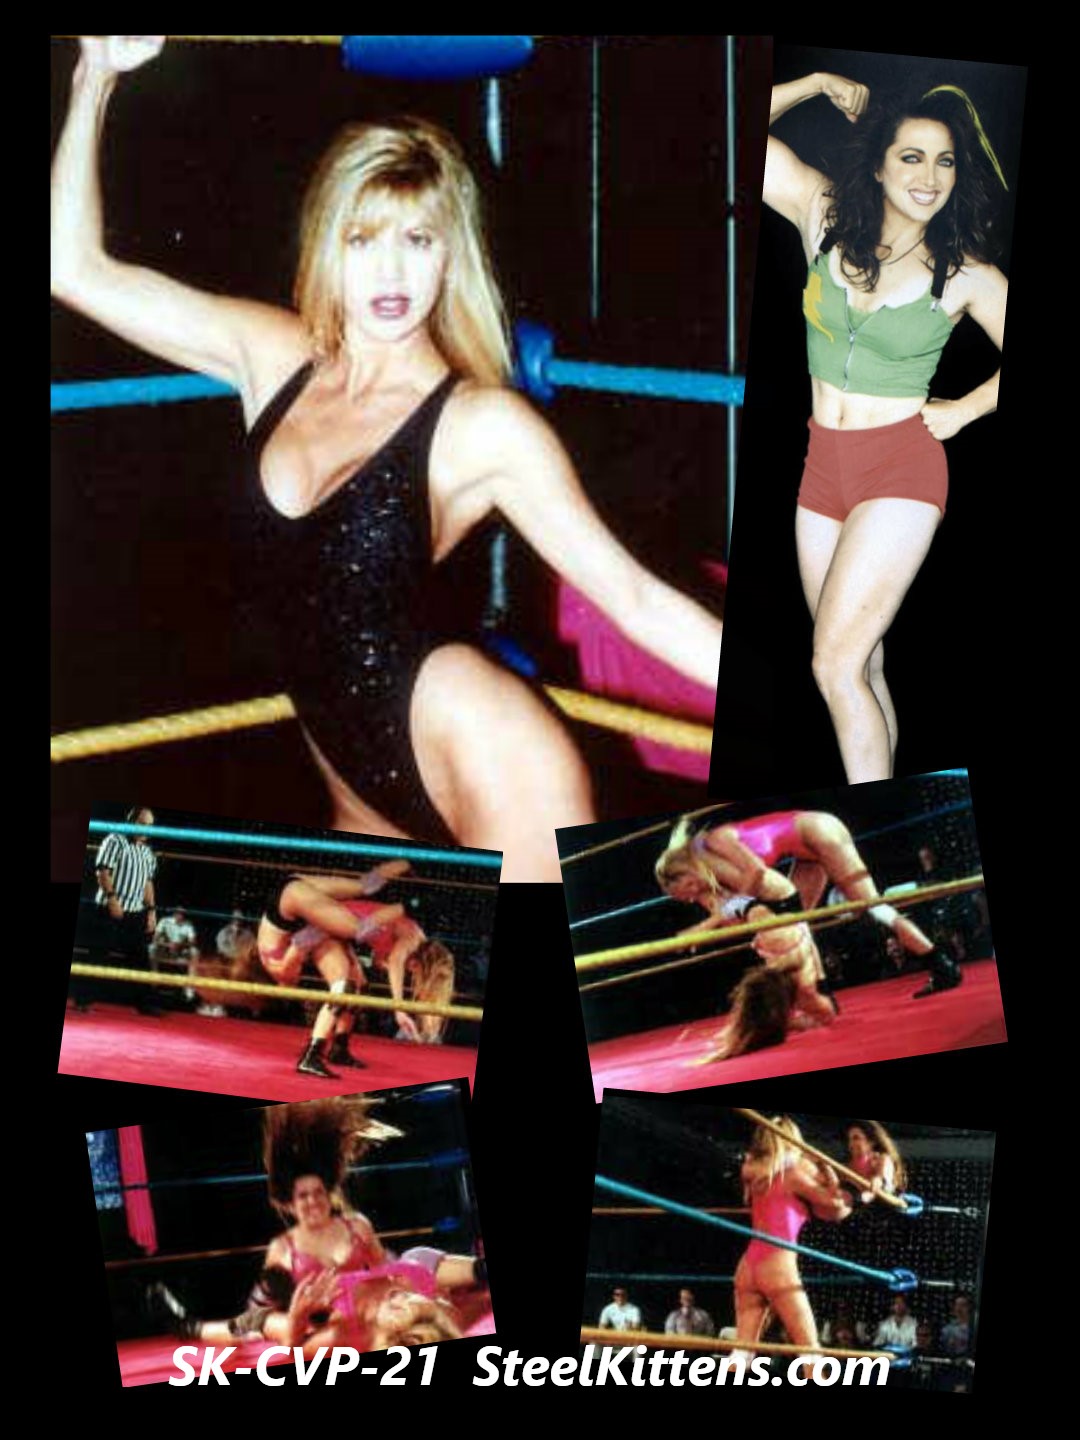 Sunset Strip | Pro Wrestling | Cheryl vs. Hollywood | Download - Streaming